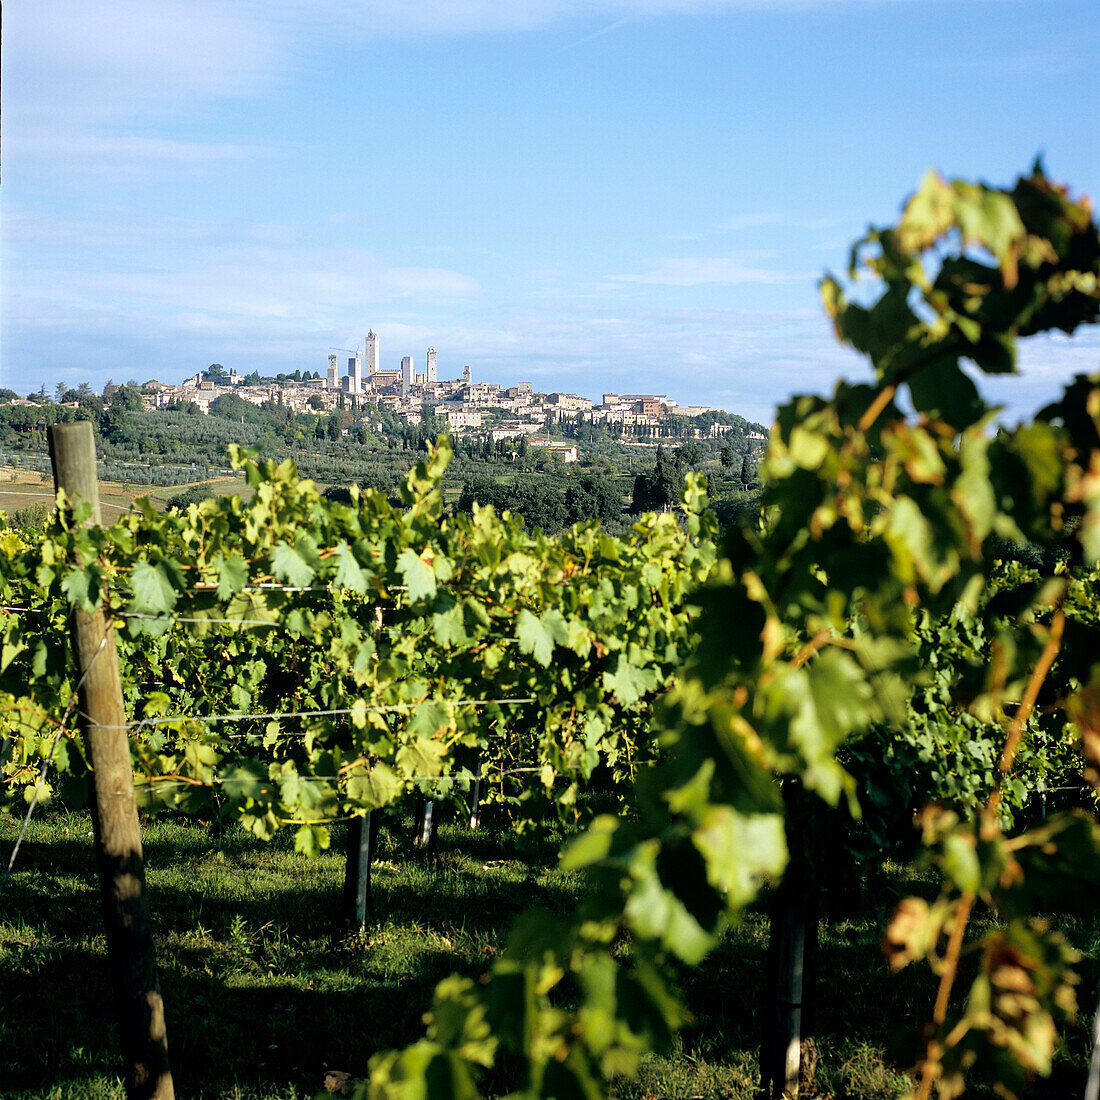 View over vines at San Gimignano, Tuscany, Italy